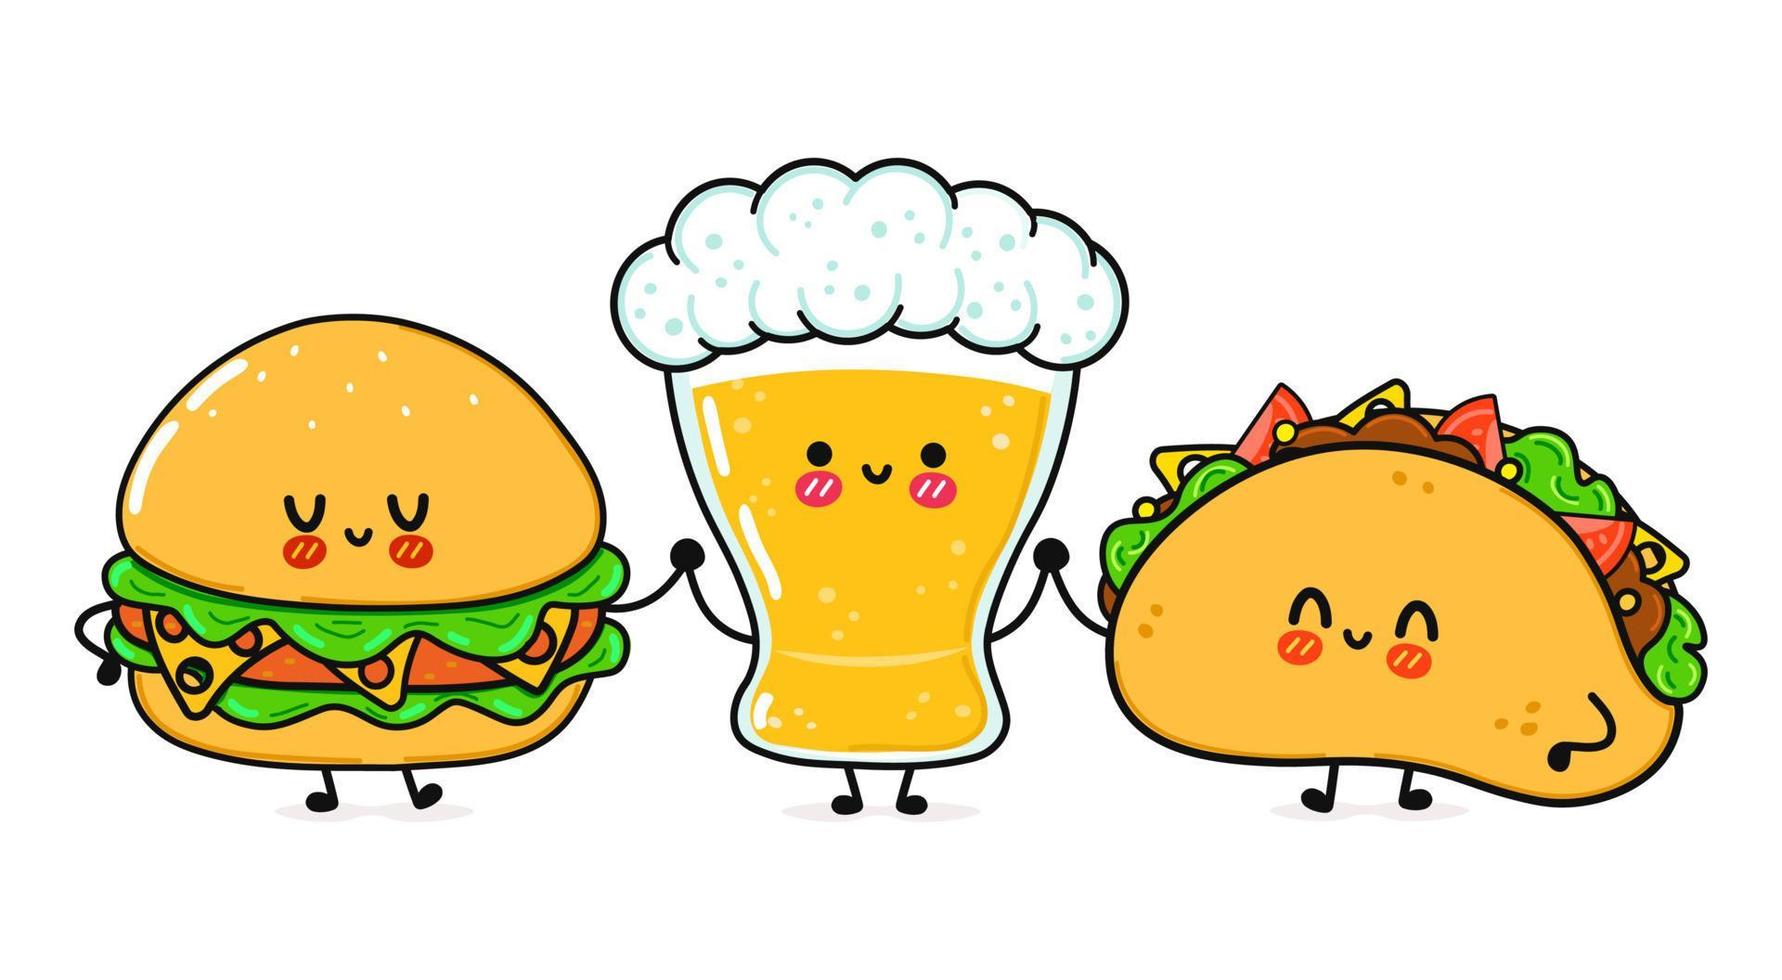 schattig, grappig vrolijk glas bier taco hamburger. vector hand getekend kawaii stripfiguren, illustratie pictogram. grappige cartoon glas bier taco hamburger mascotte vrienden concept